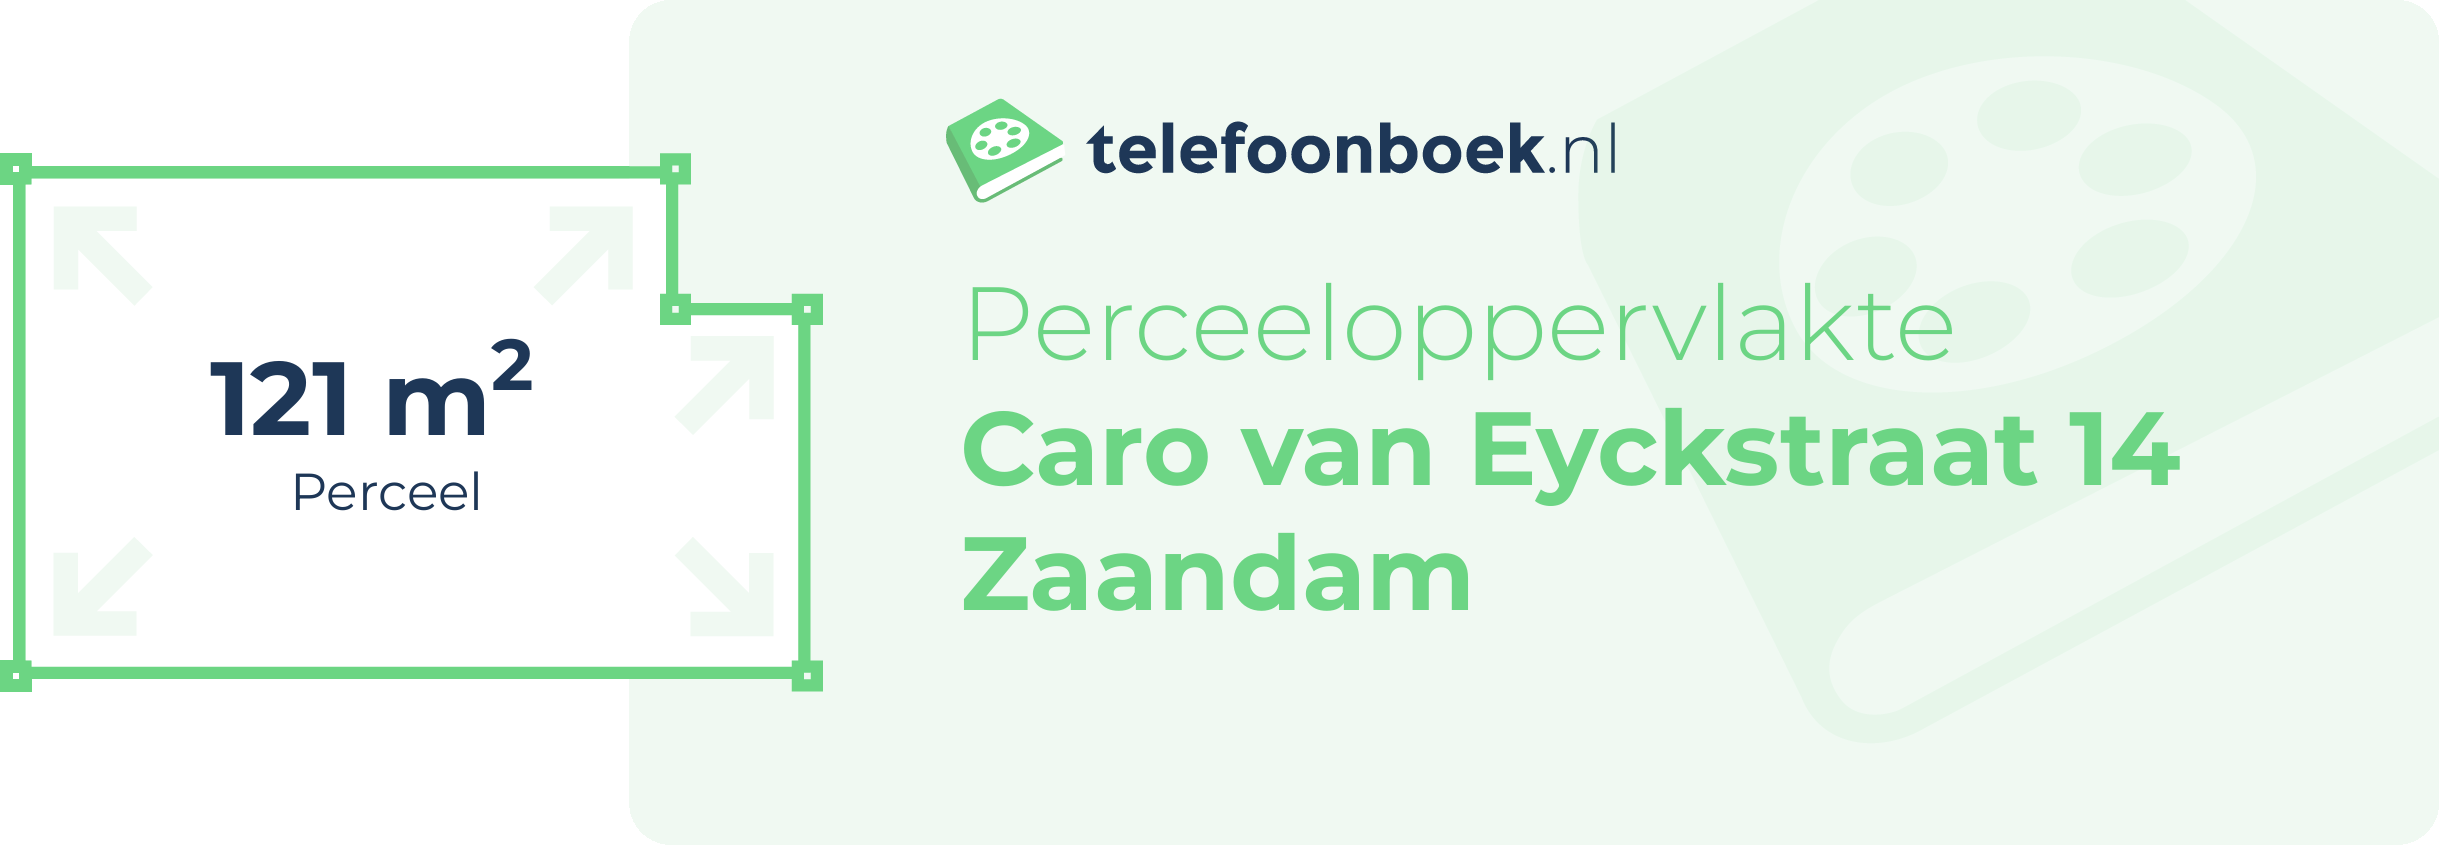 Perceeloppervlakte Caro Van Eyckstraat 14 Zaandam